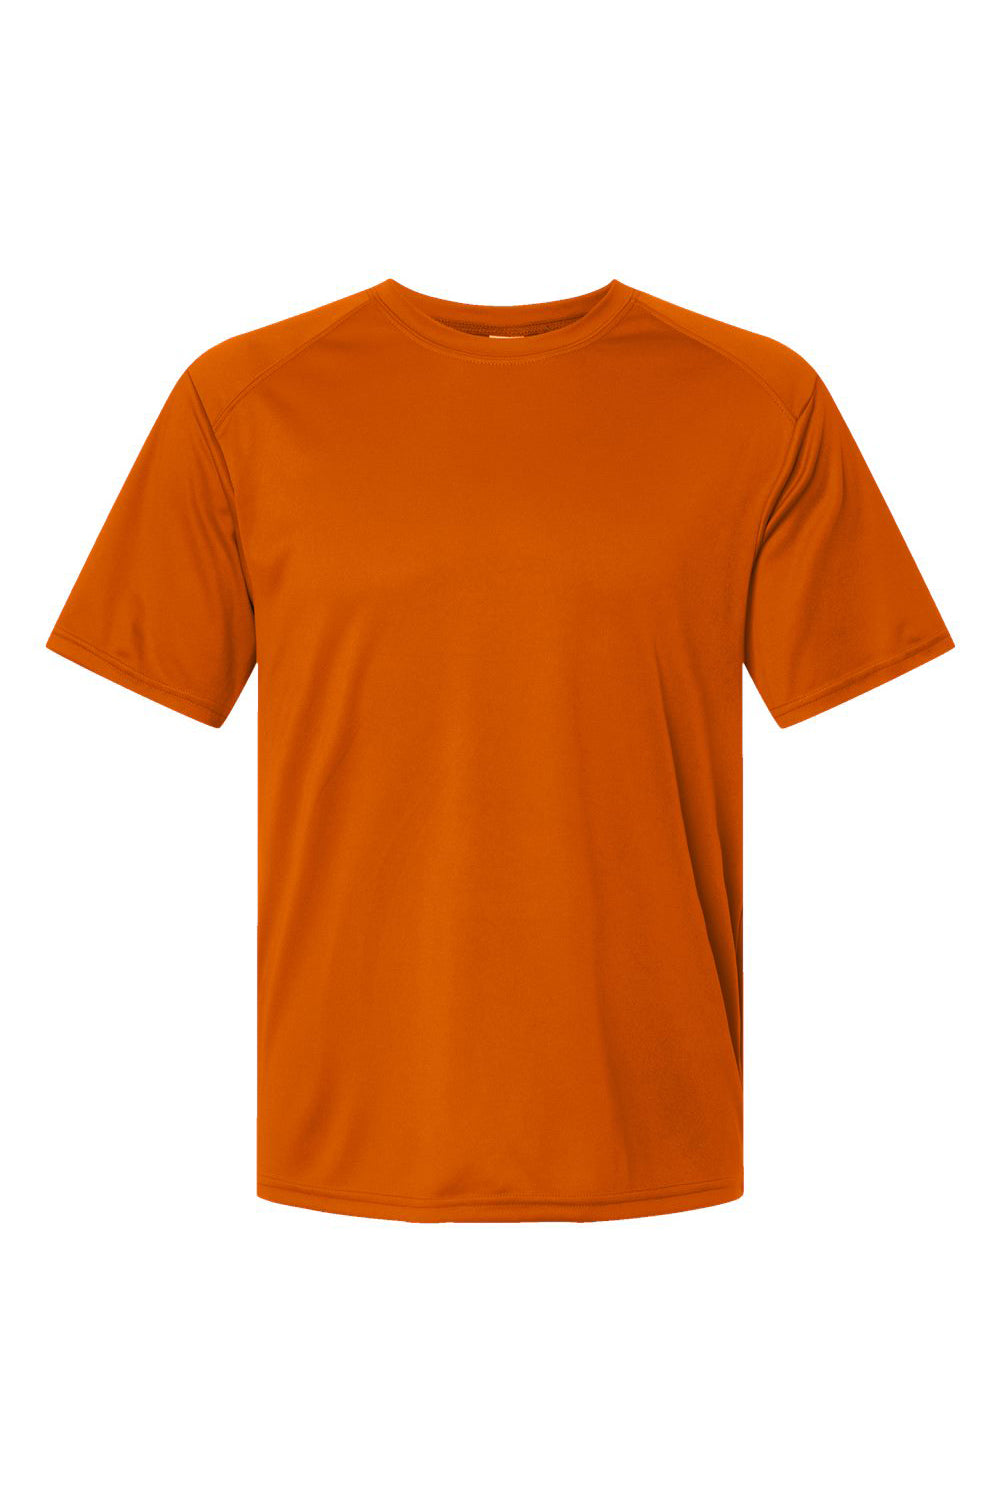 Paragon 200 Mens Islander Performance Short Sleeve Crewneck T-Shirt Orange Flat Front